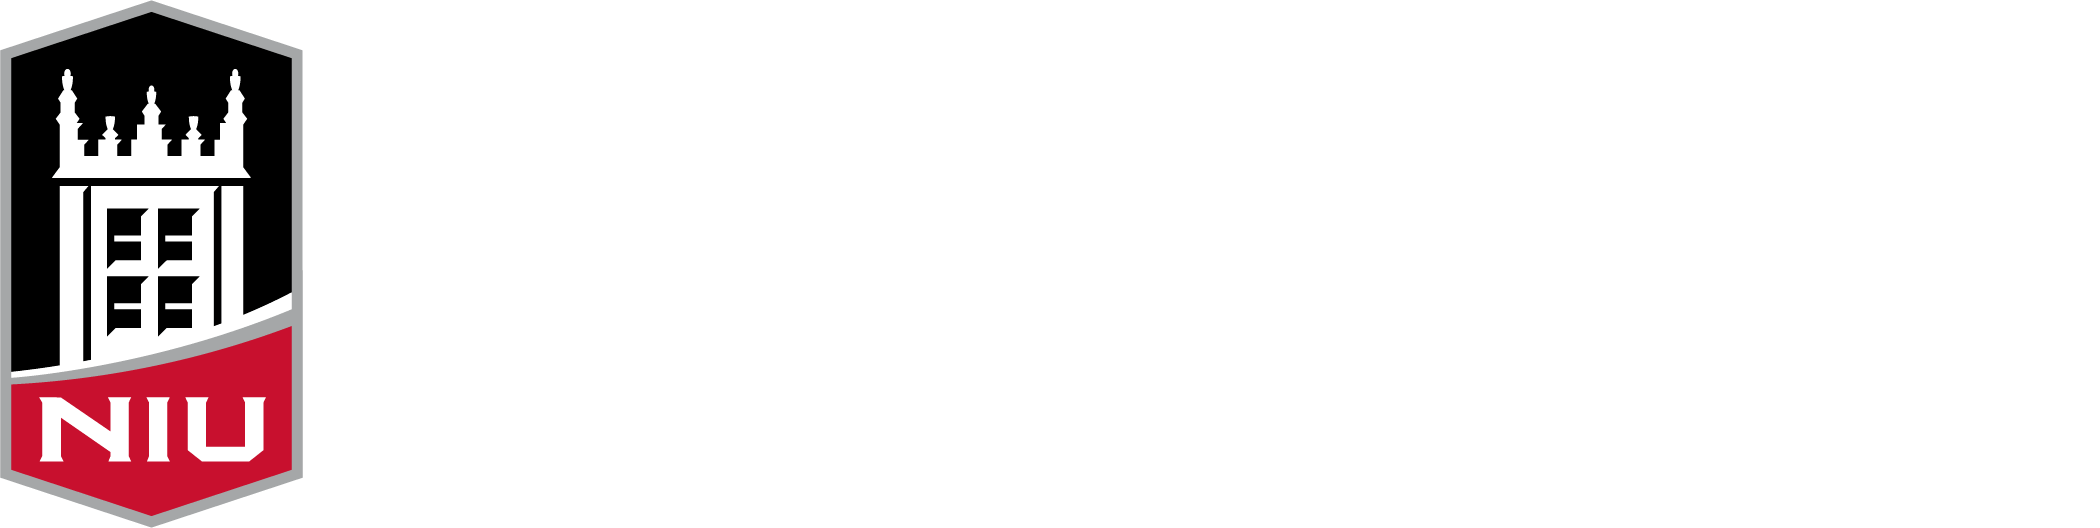 NIU Office of Innovation logo